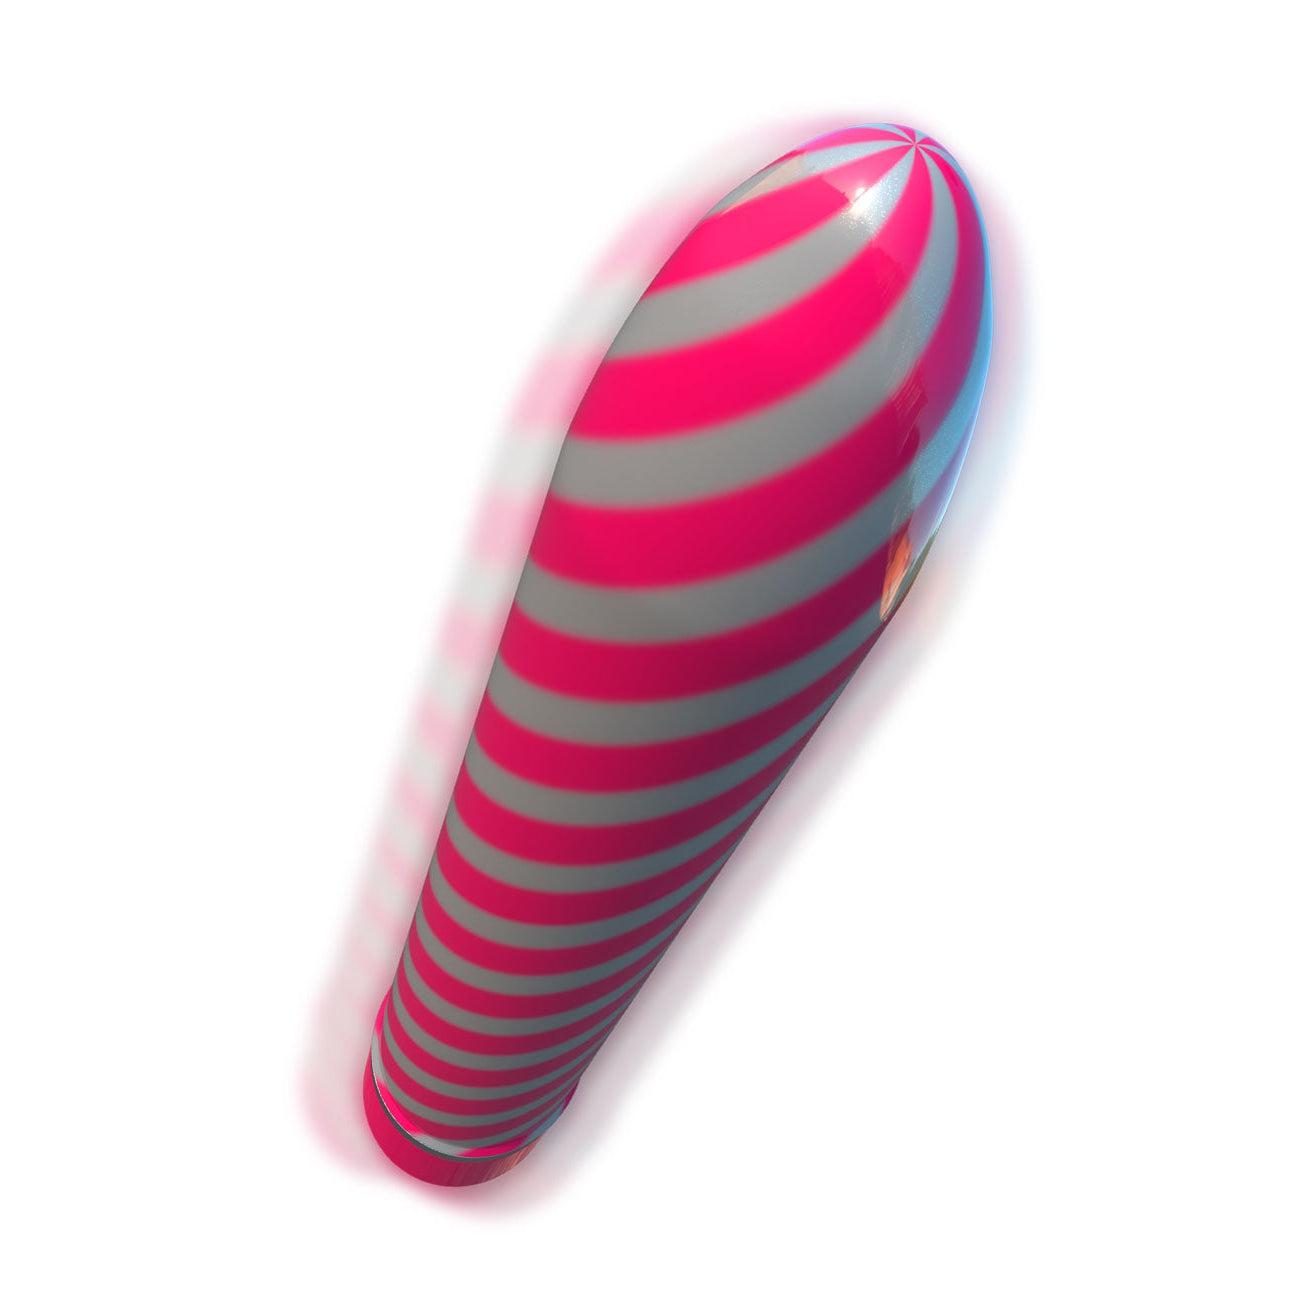 Sweet Swirl Vibrator - Pink